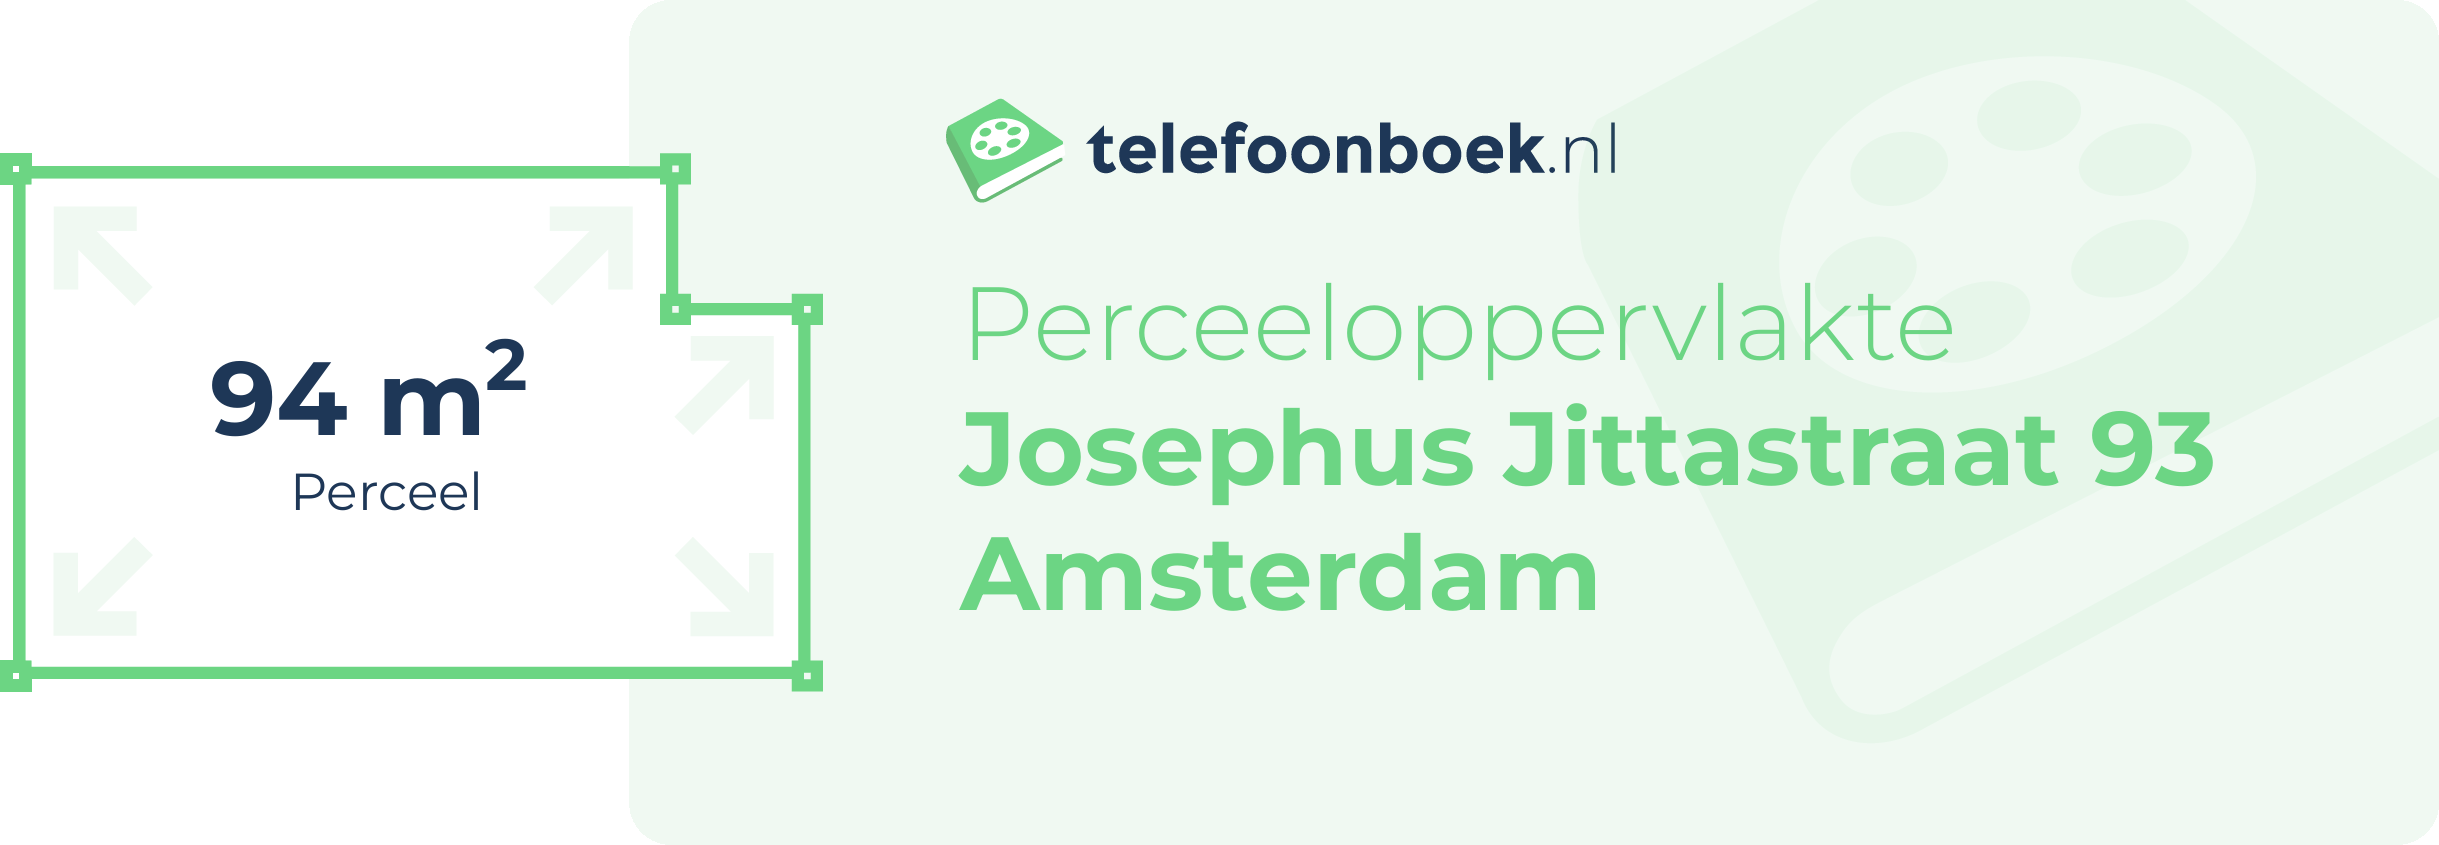 Perceeloppervlakte Josephus Jittastraat 93 Amsterdam